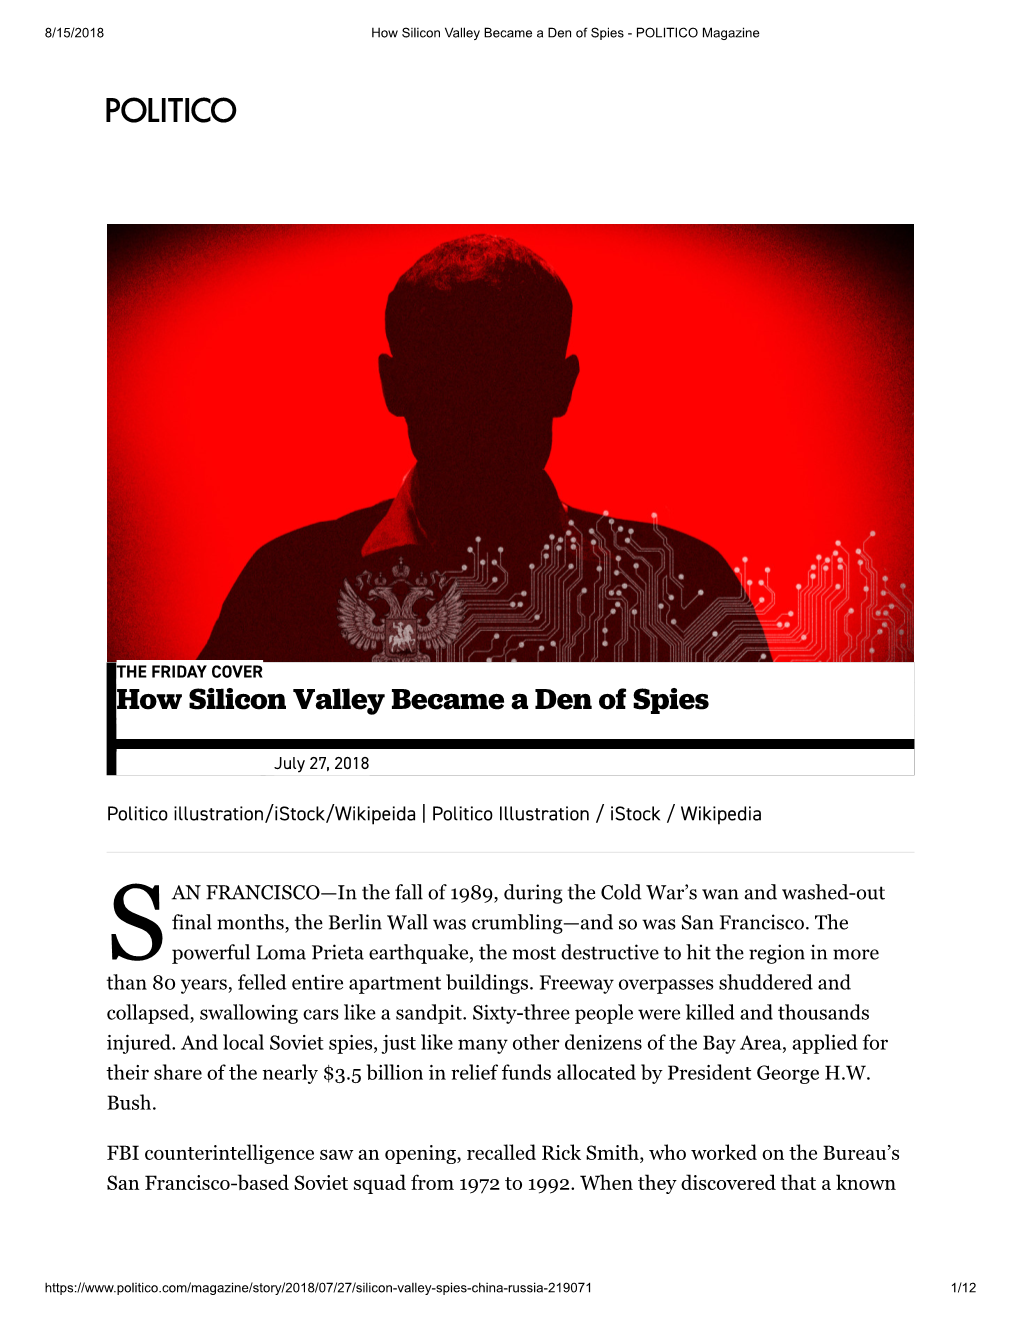 How Silicon Valley Became a Den of Spies - POLITICO Magazine